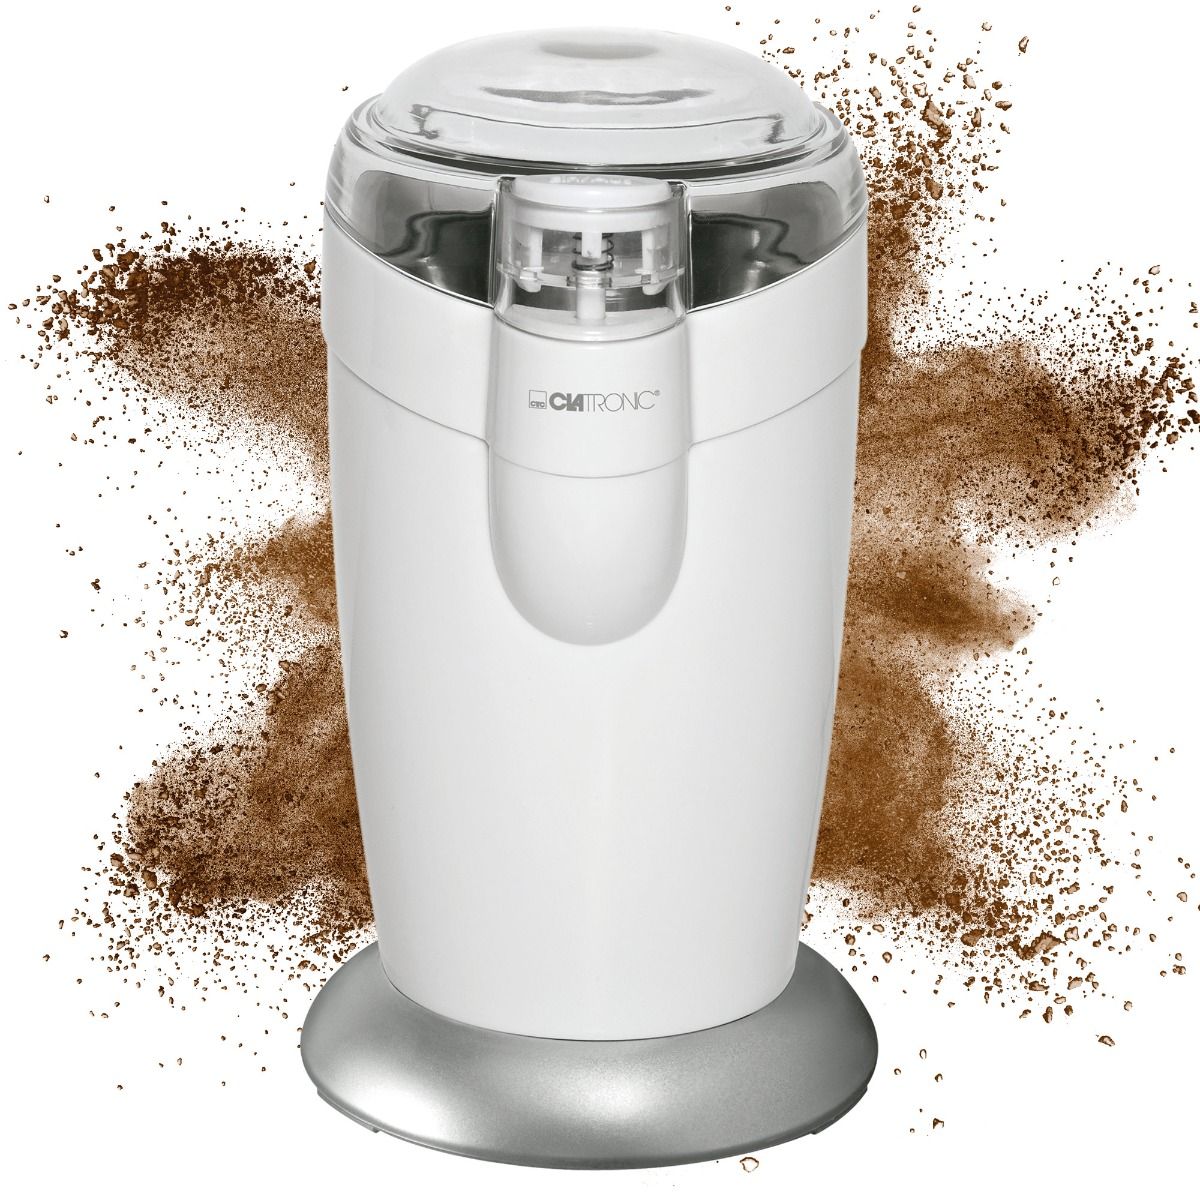 Clatronic Coffee grinder KSW 3306 white